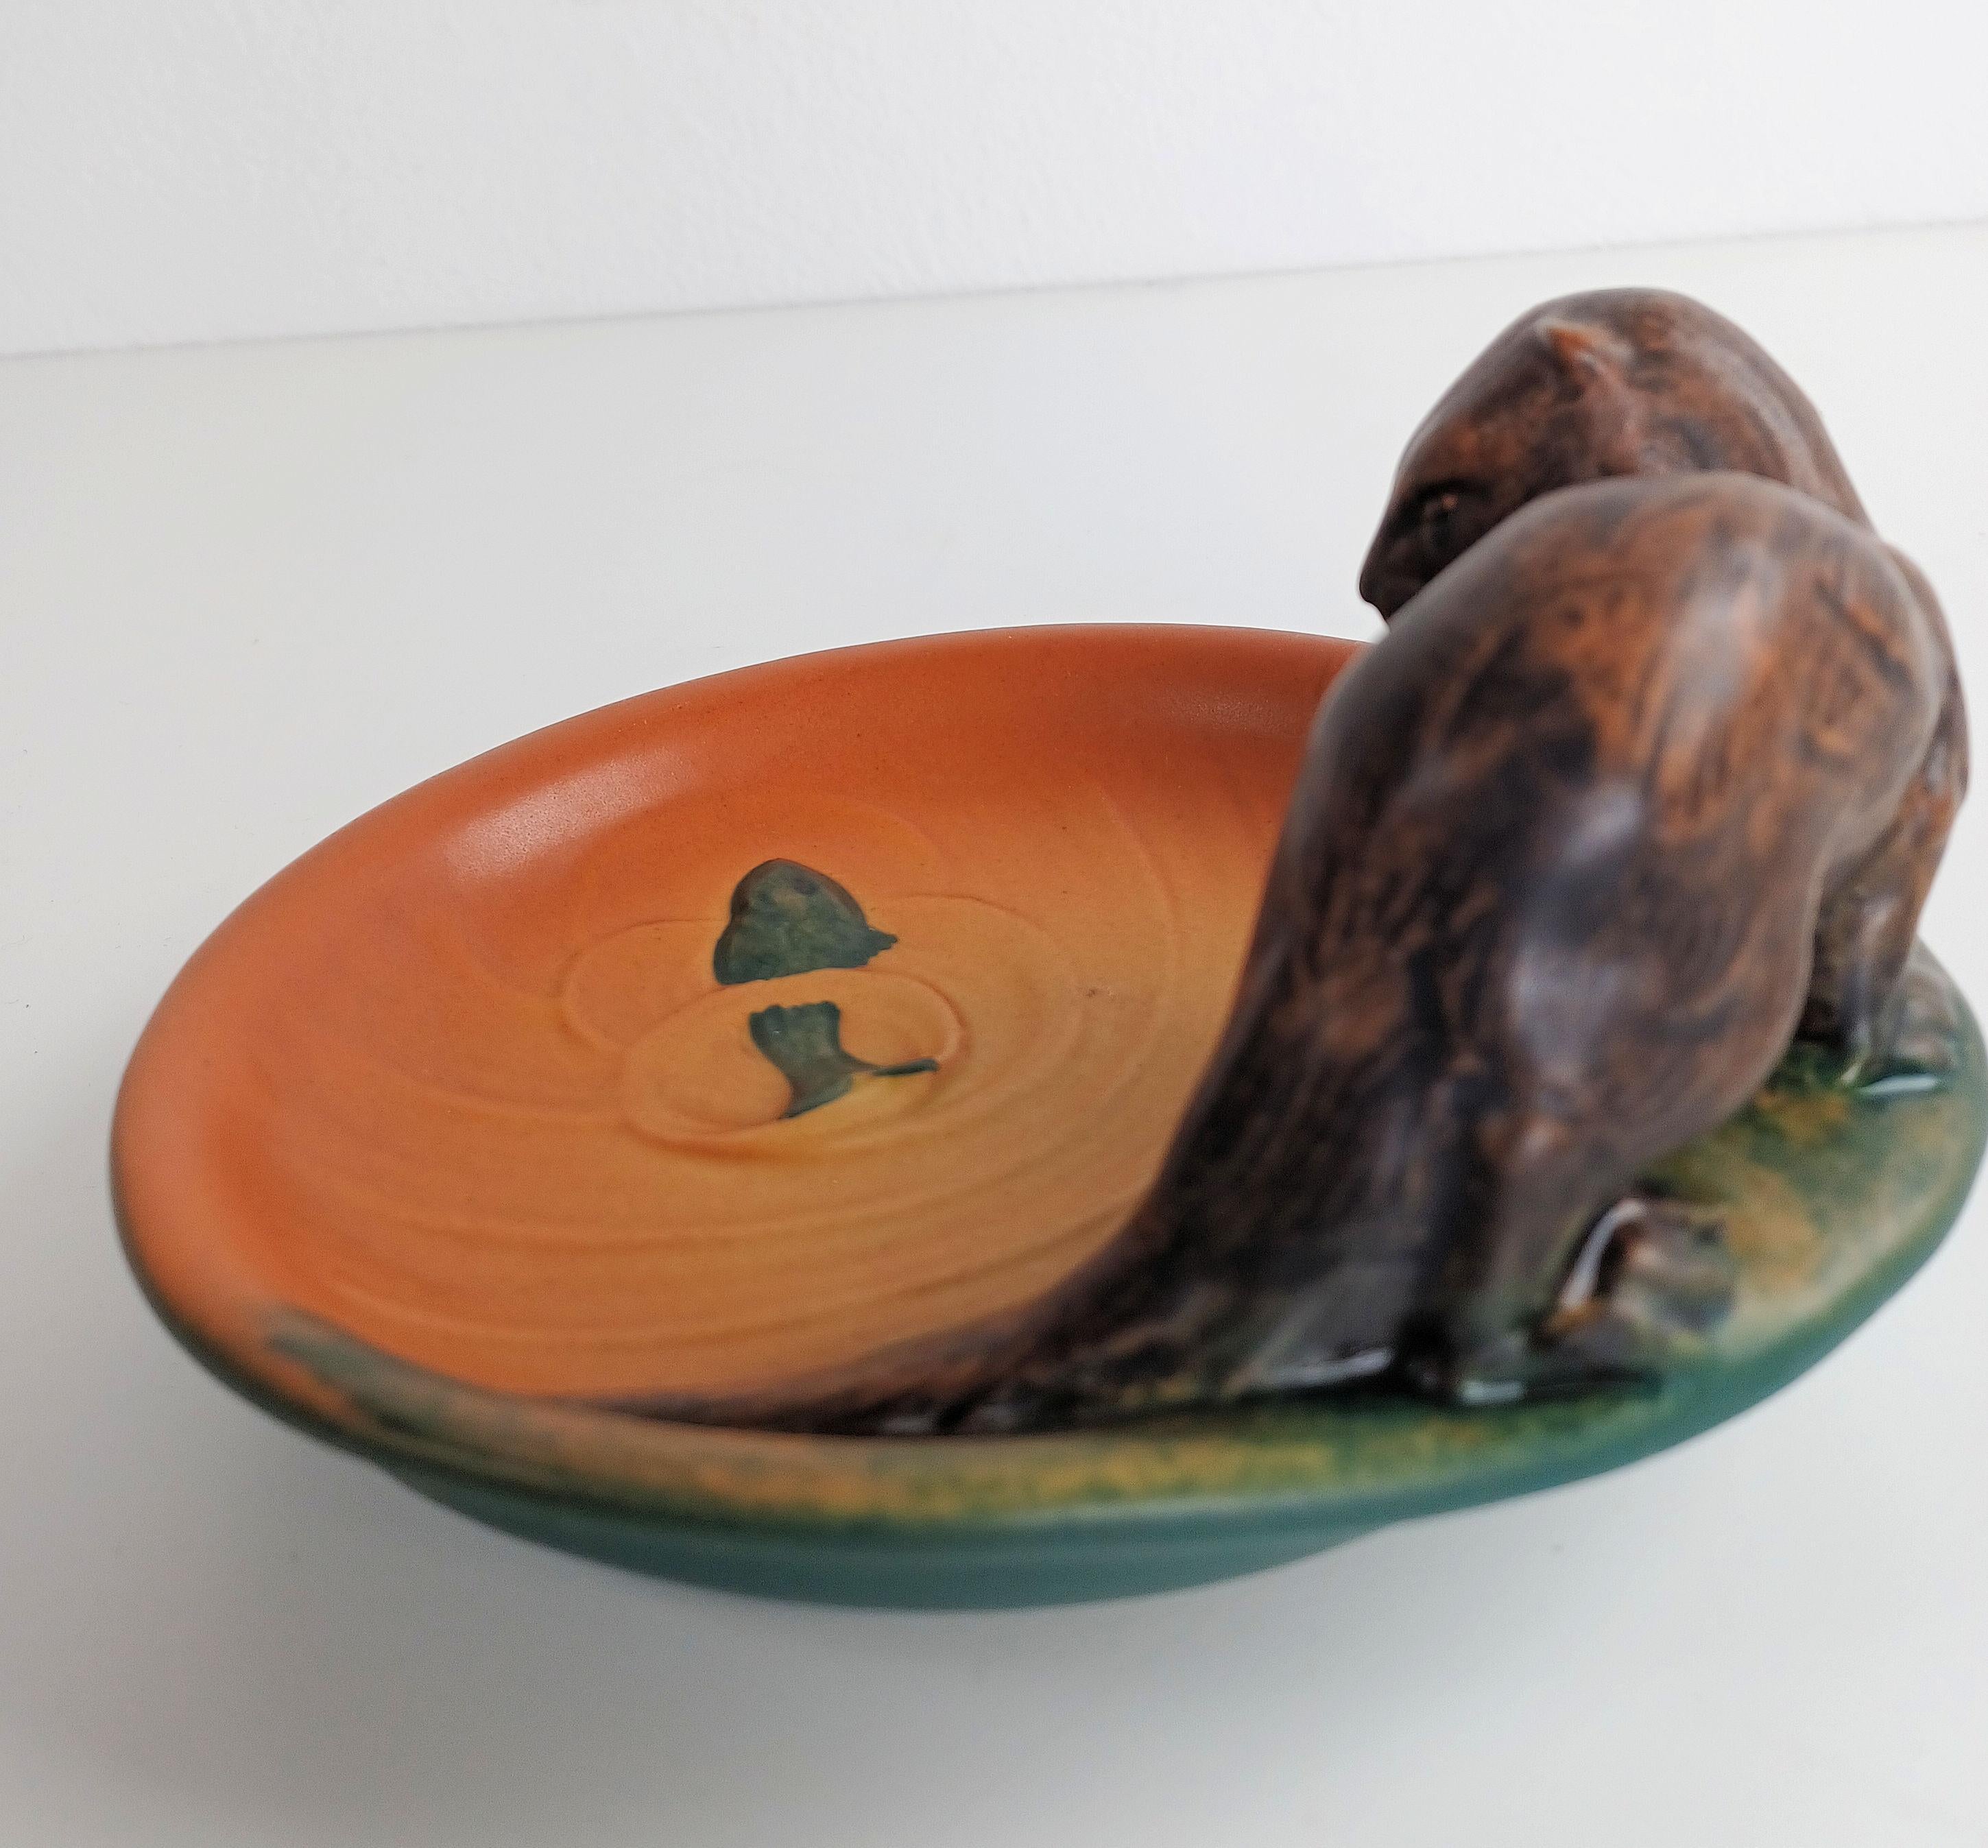 1930s Danish Hand-Crafted Art Nouveau Polecat Ash Tray / Bowl by P. Ipsens Enke For Sale 2